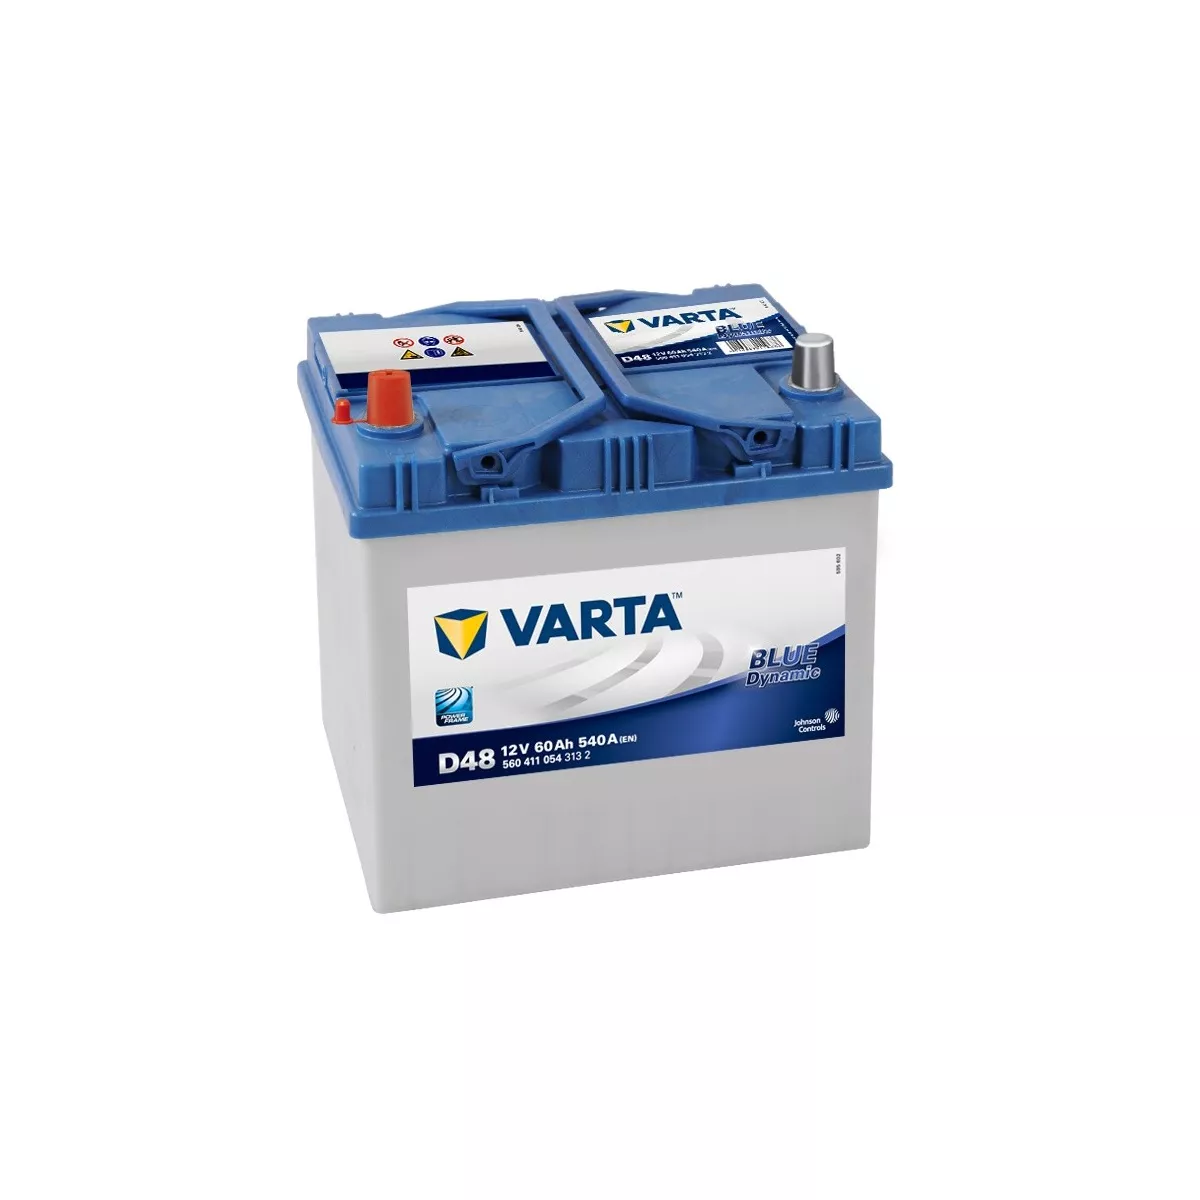 BATTERIE VARTA BLUE DYNAMIC D48 12V 60AH 540A - Batteries Auto